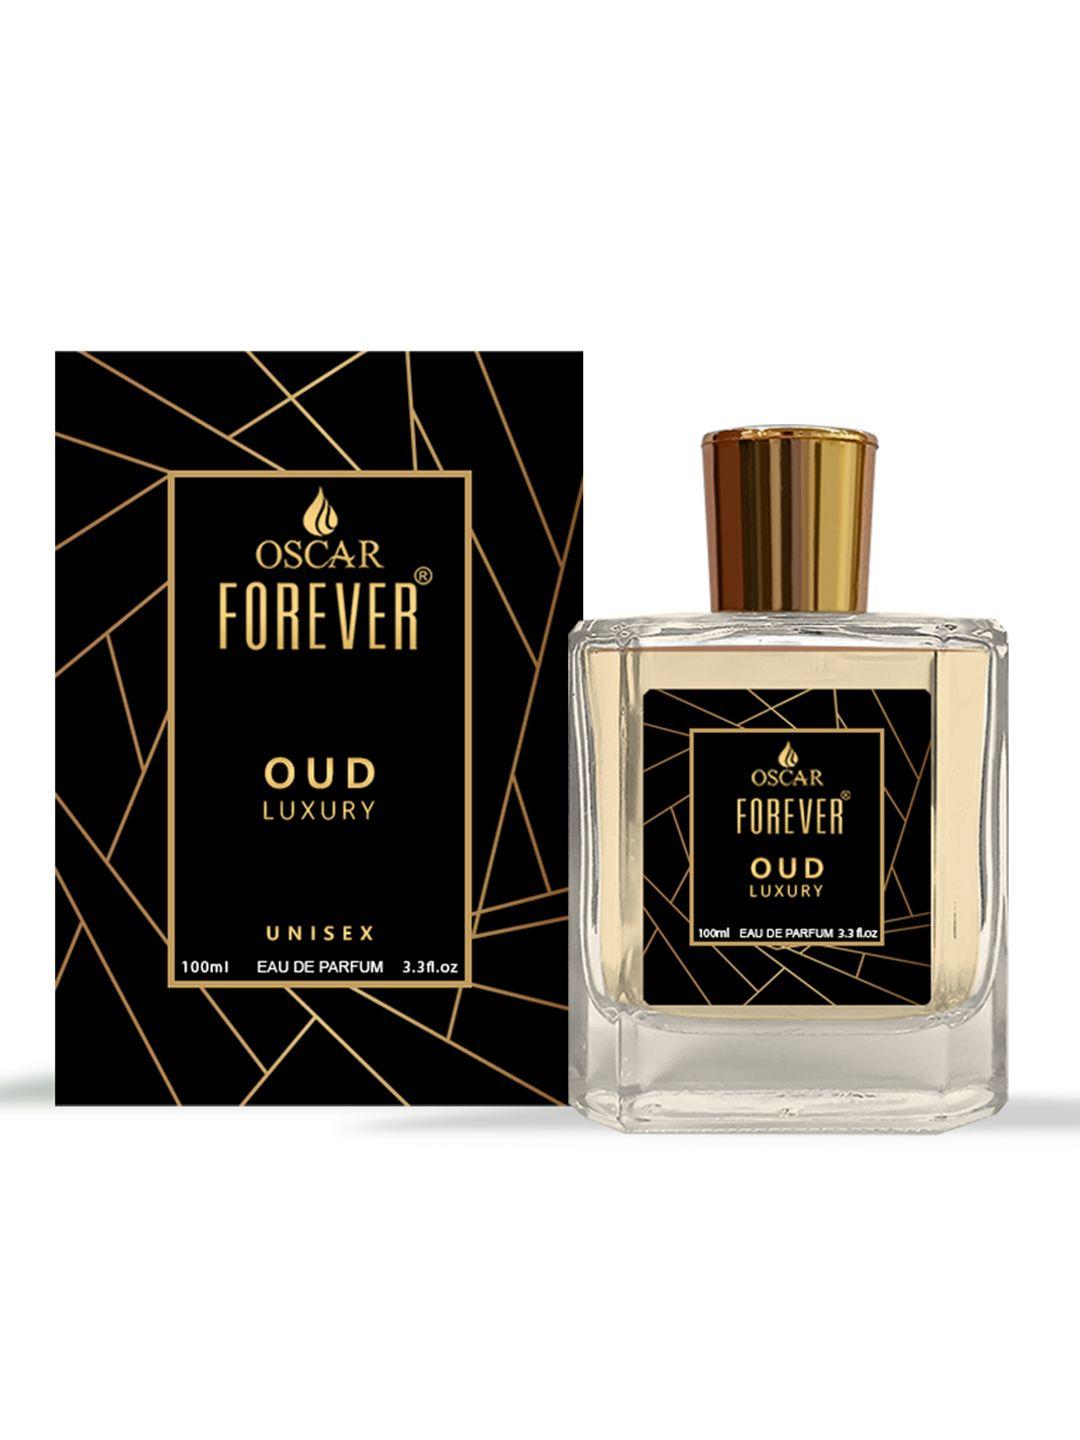 oscar forever oud luxury long lasting eau de parfum - 100ml